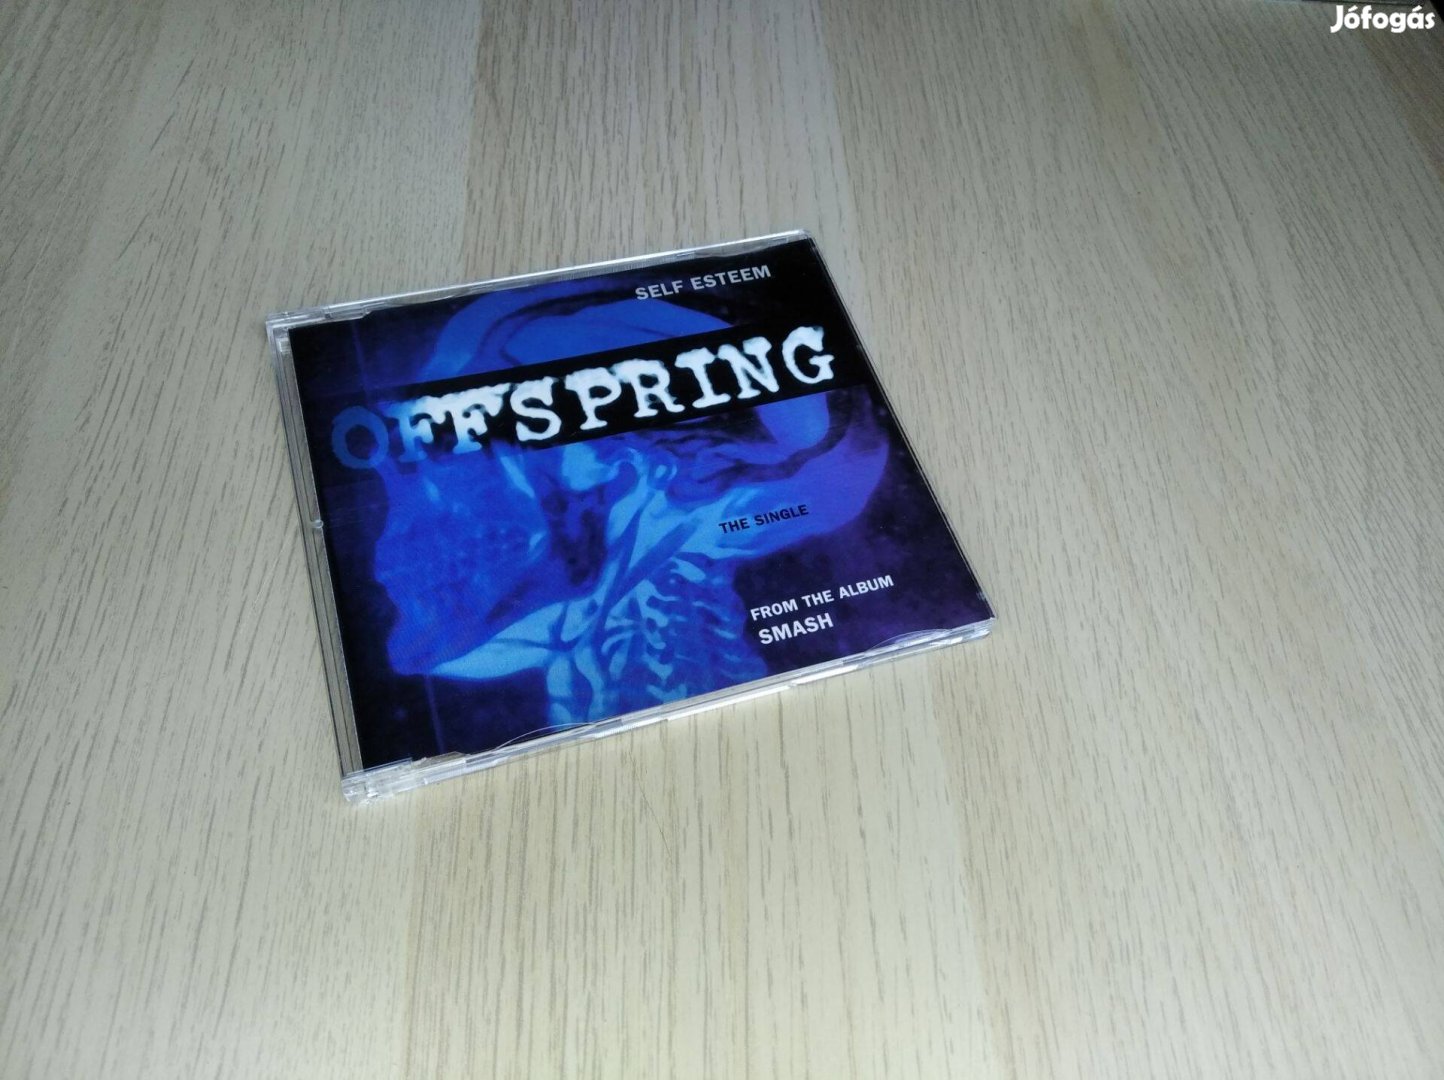 Offspring - Self Esteem / Single CD 1994